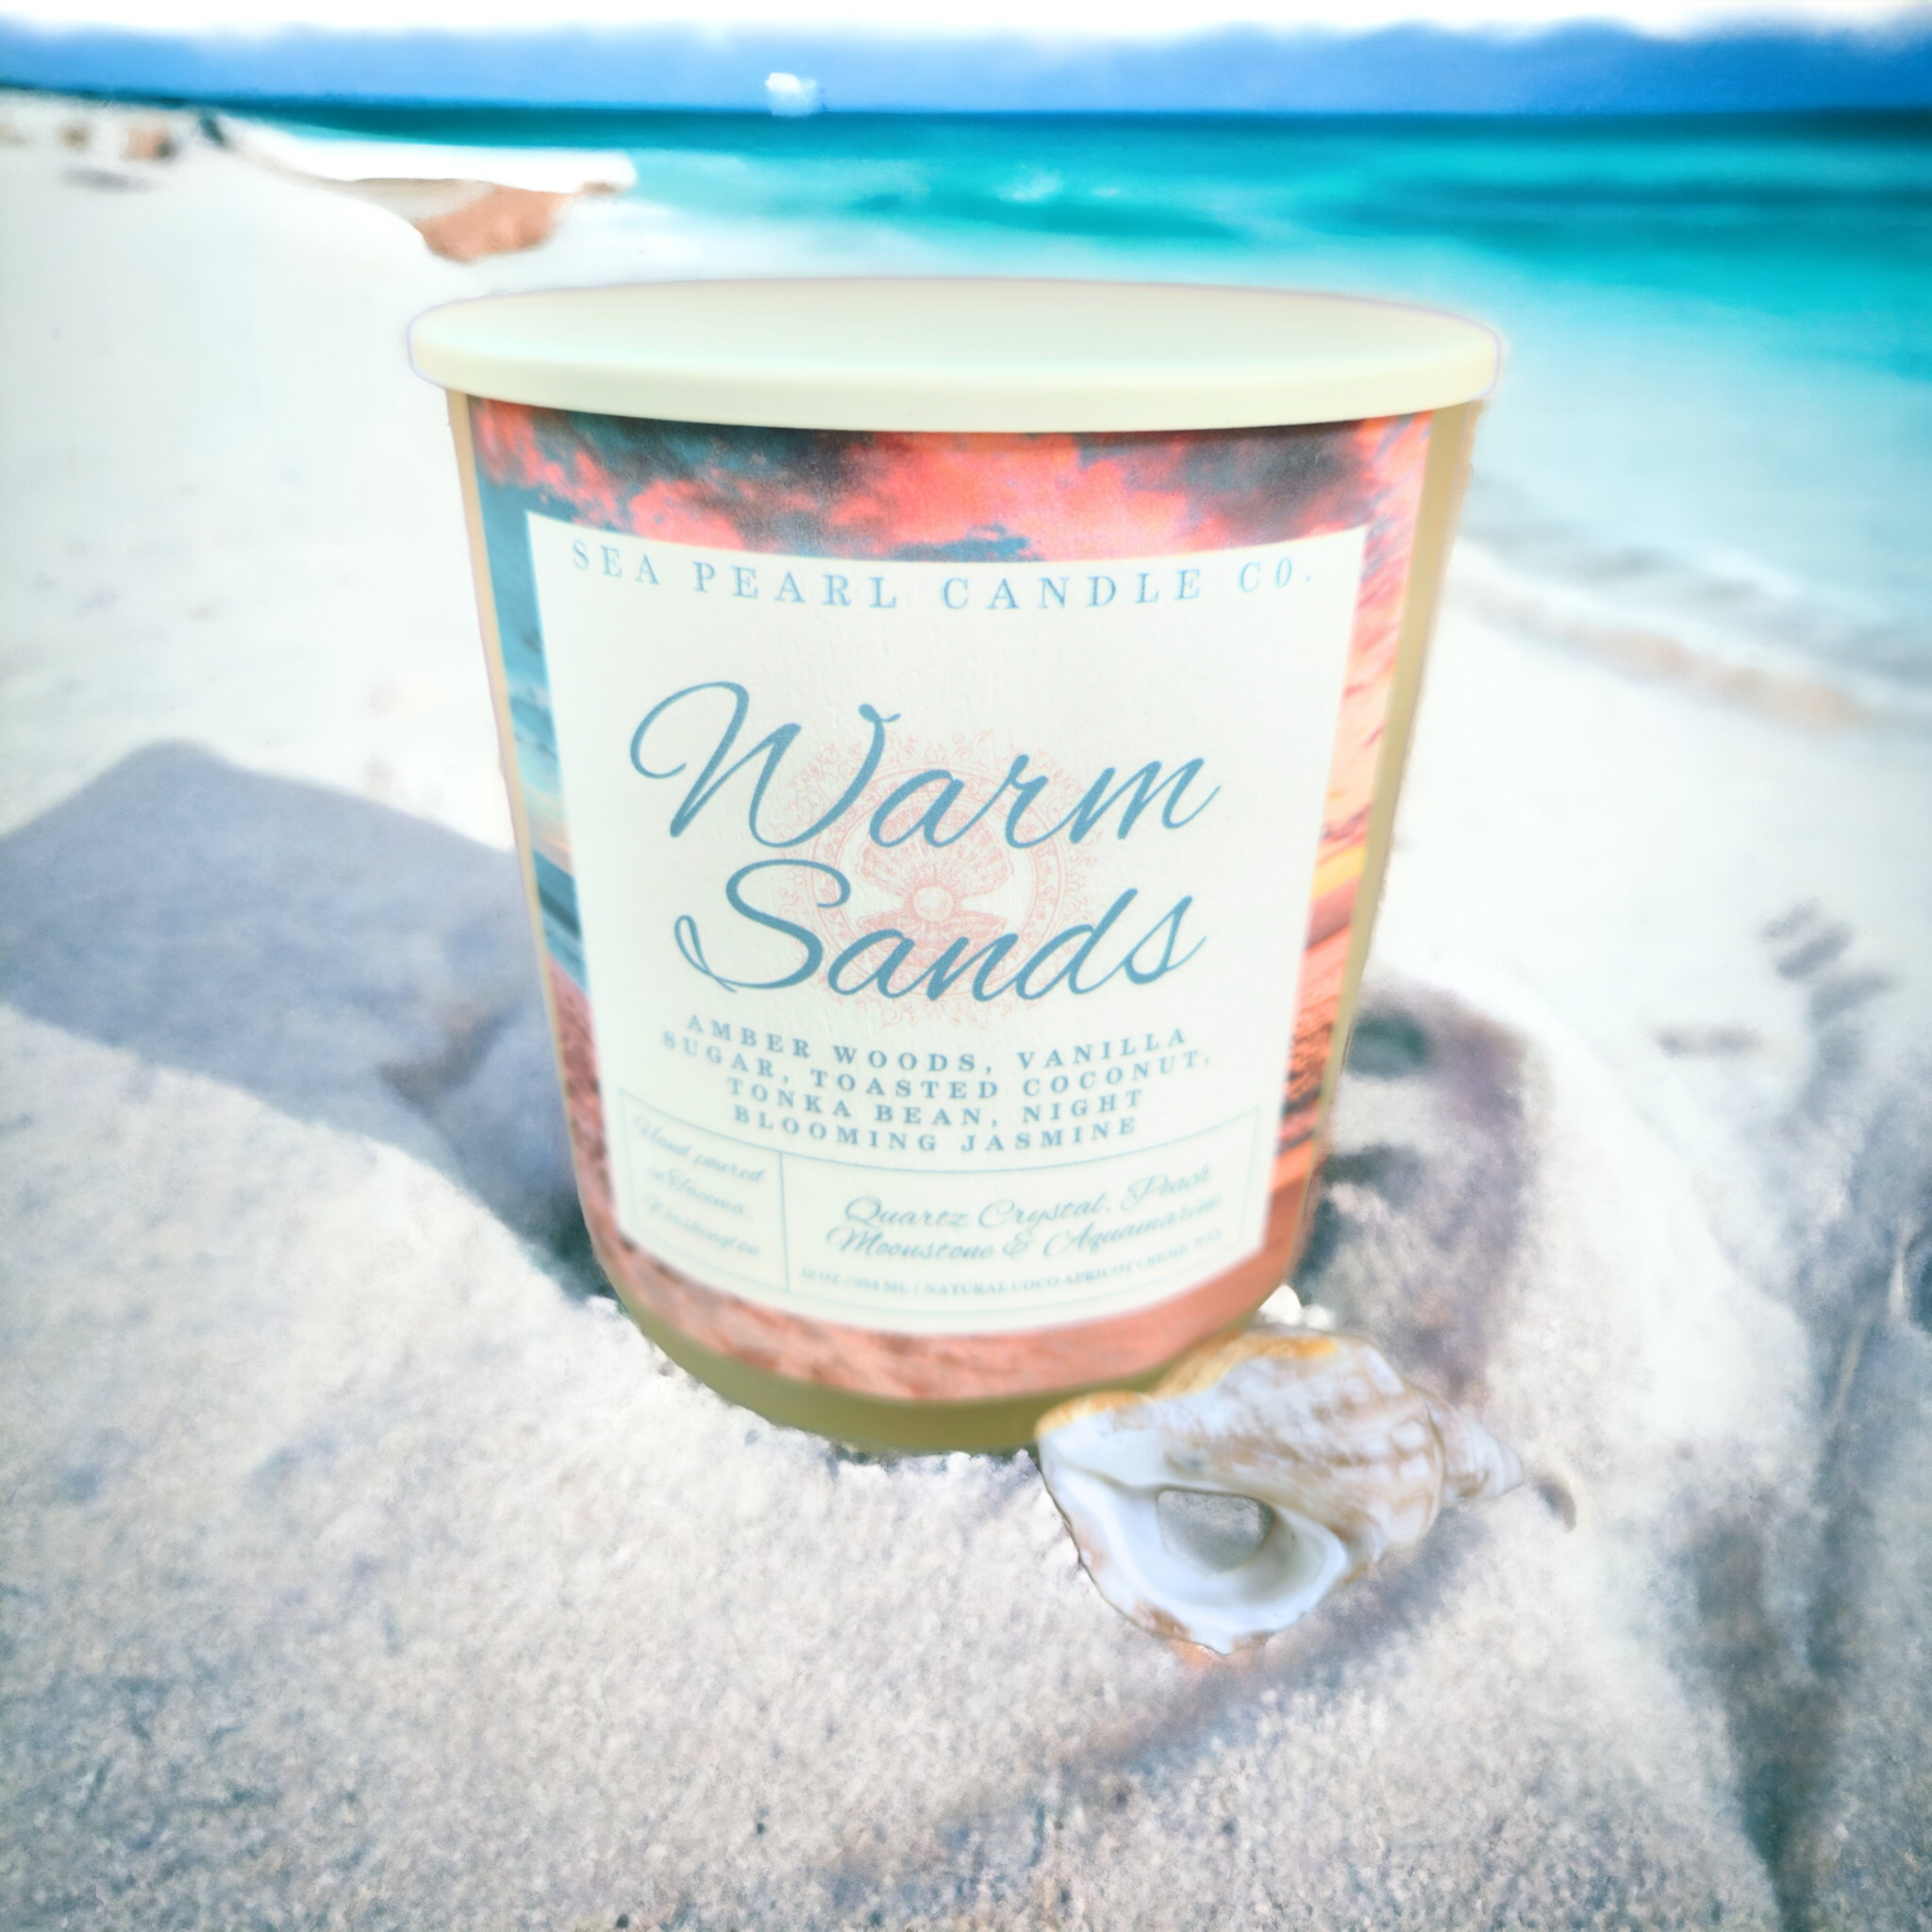 Warm Sands – SeaPearlCandleCo.